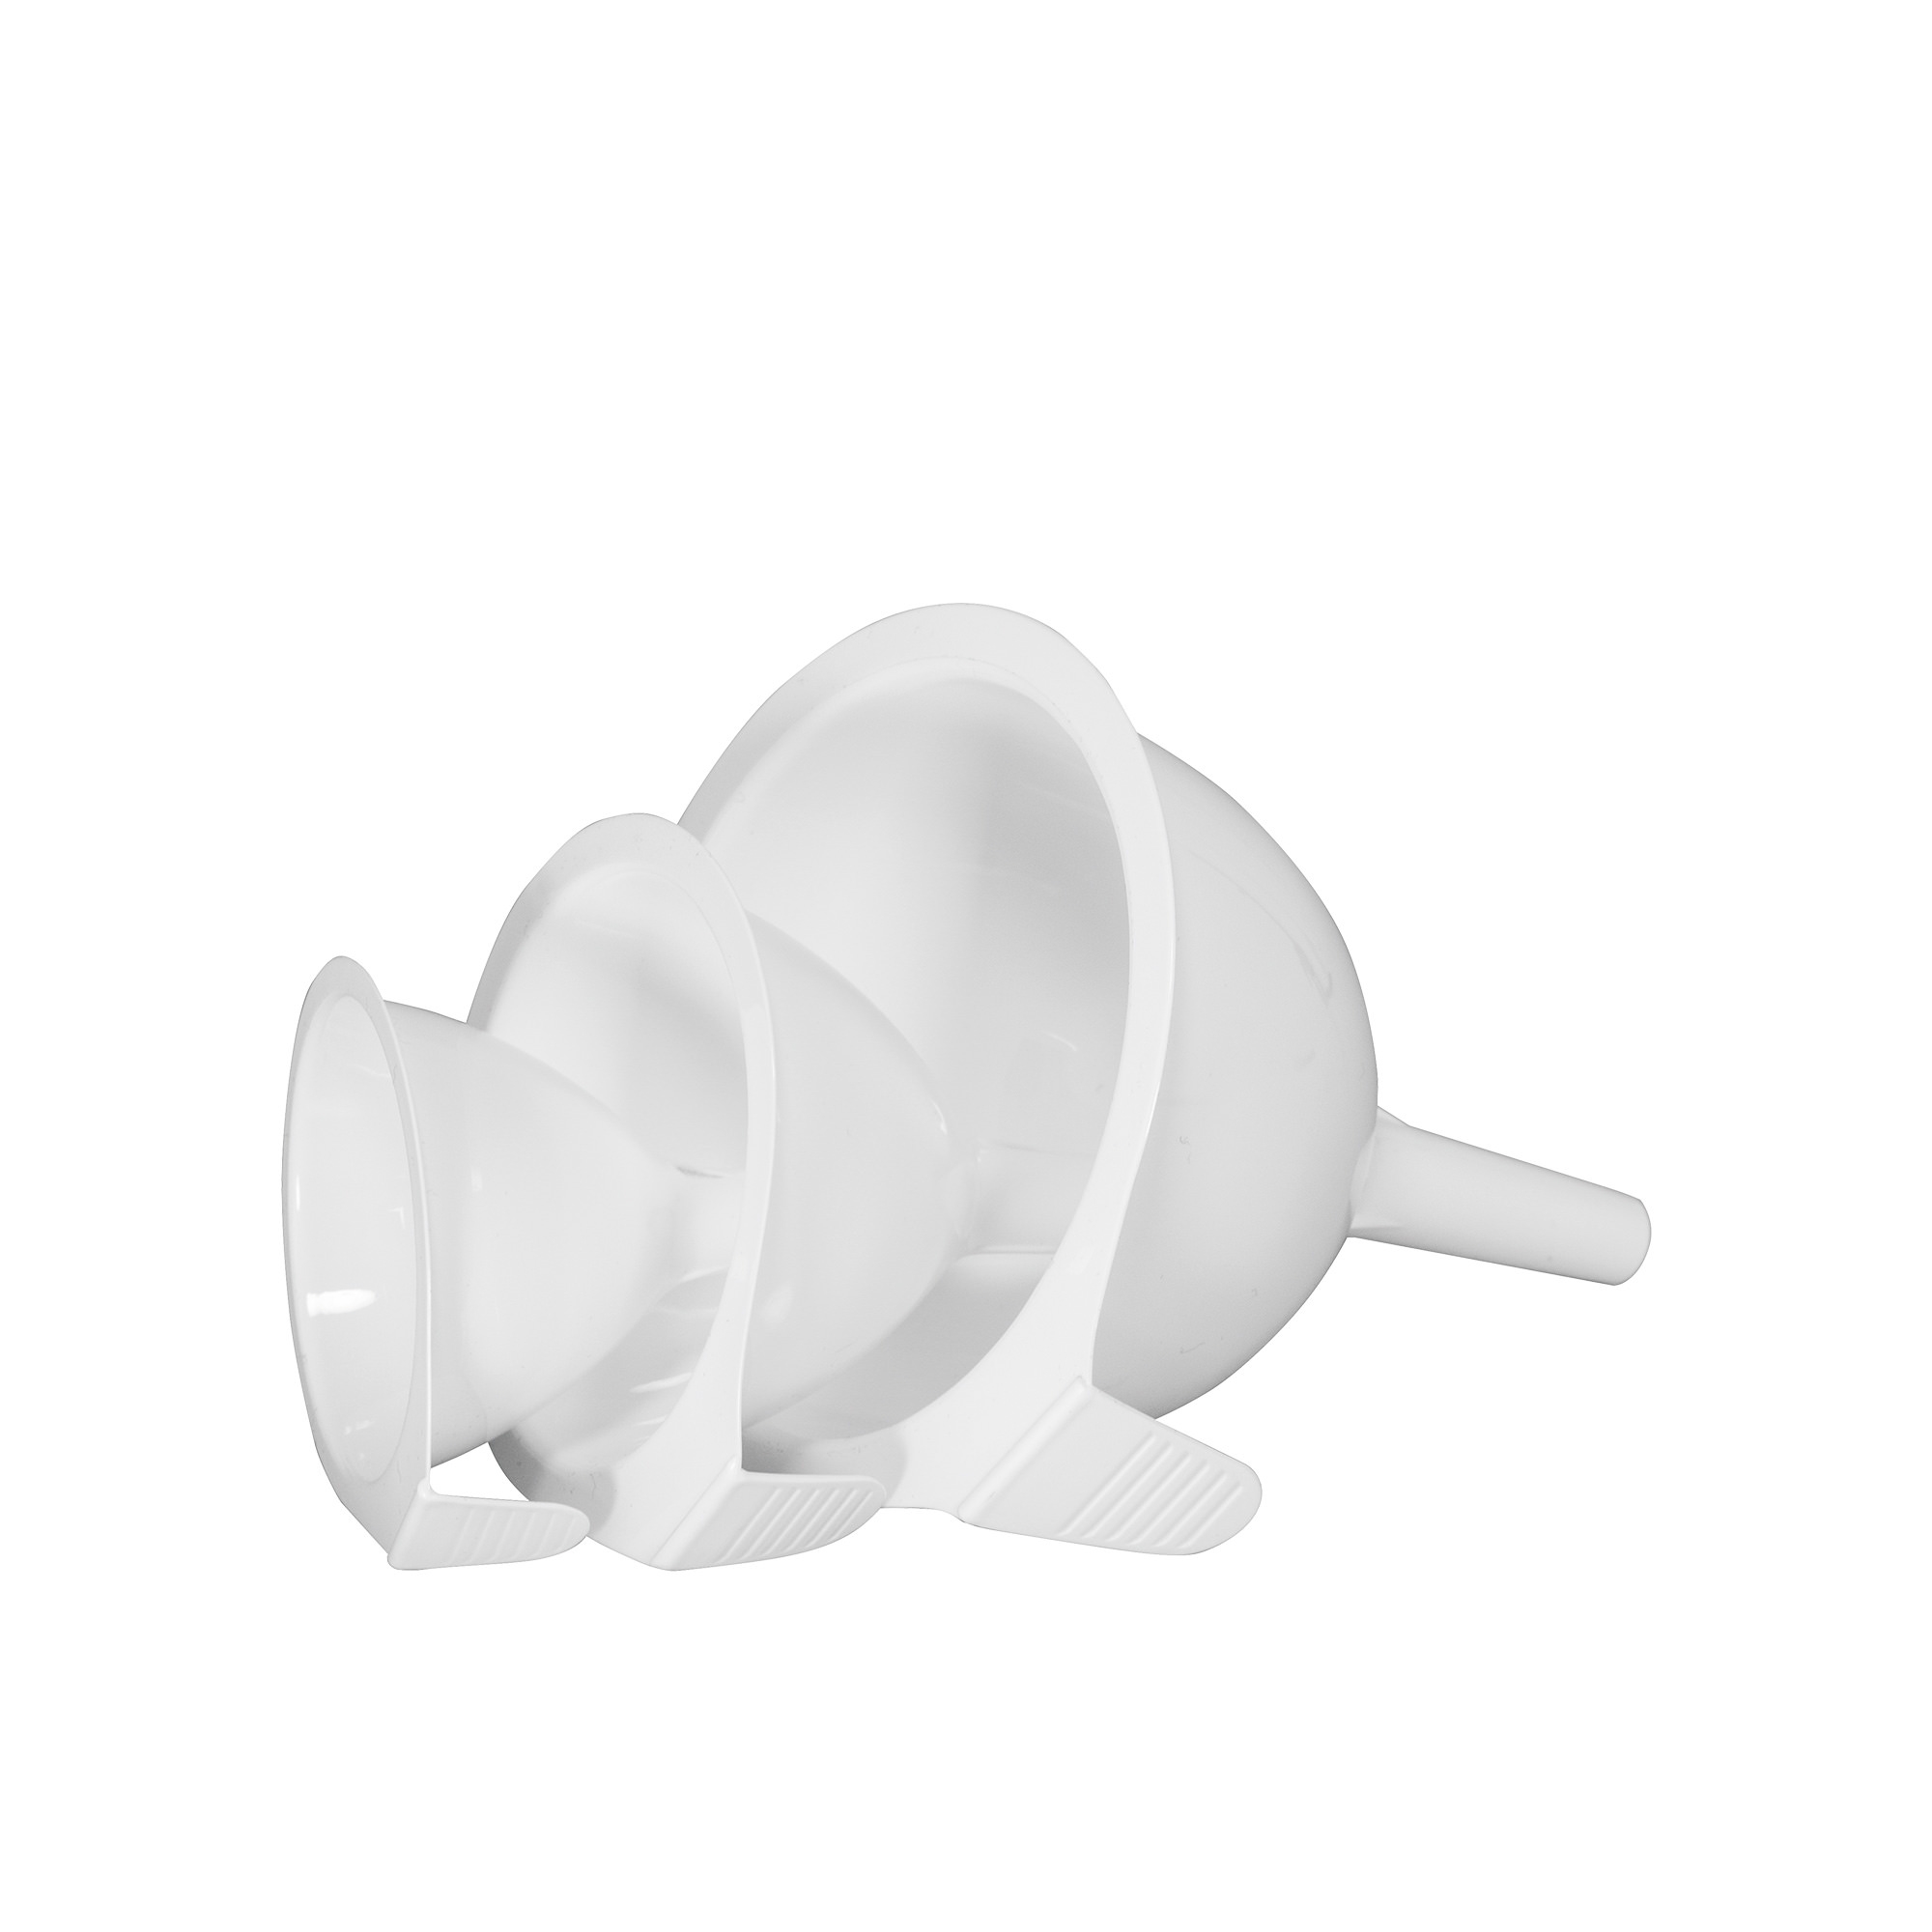 Avanti Plastic Funnel Set 3pc Image 1